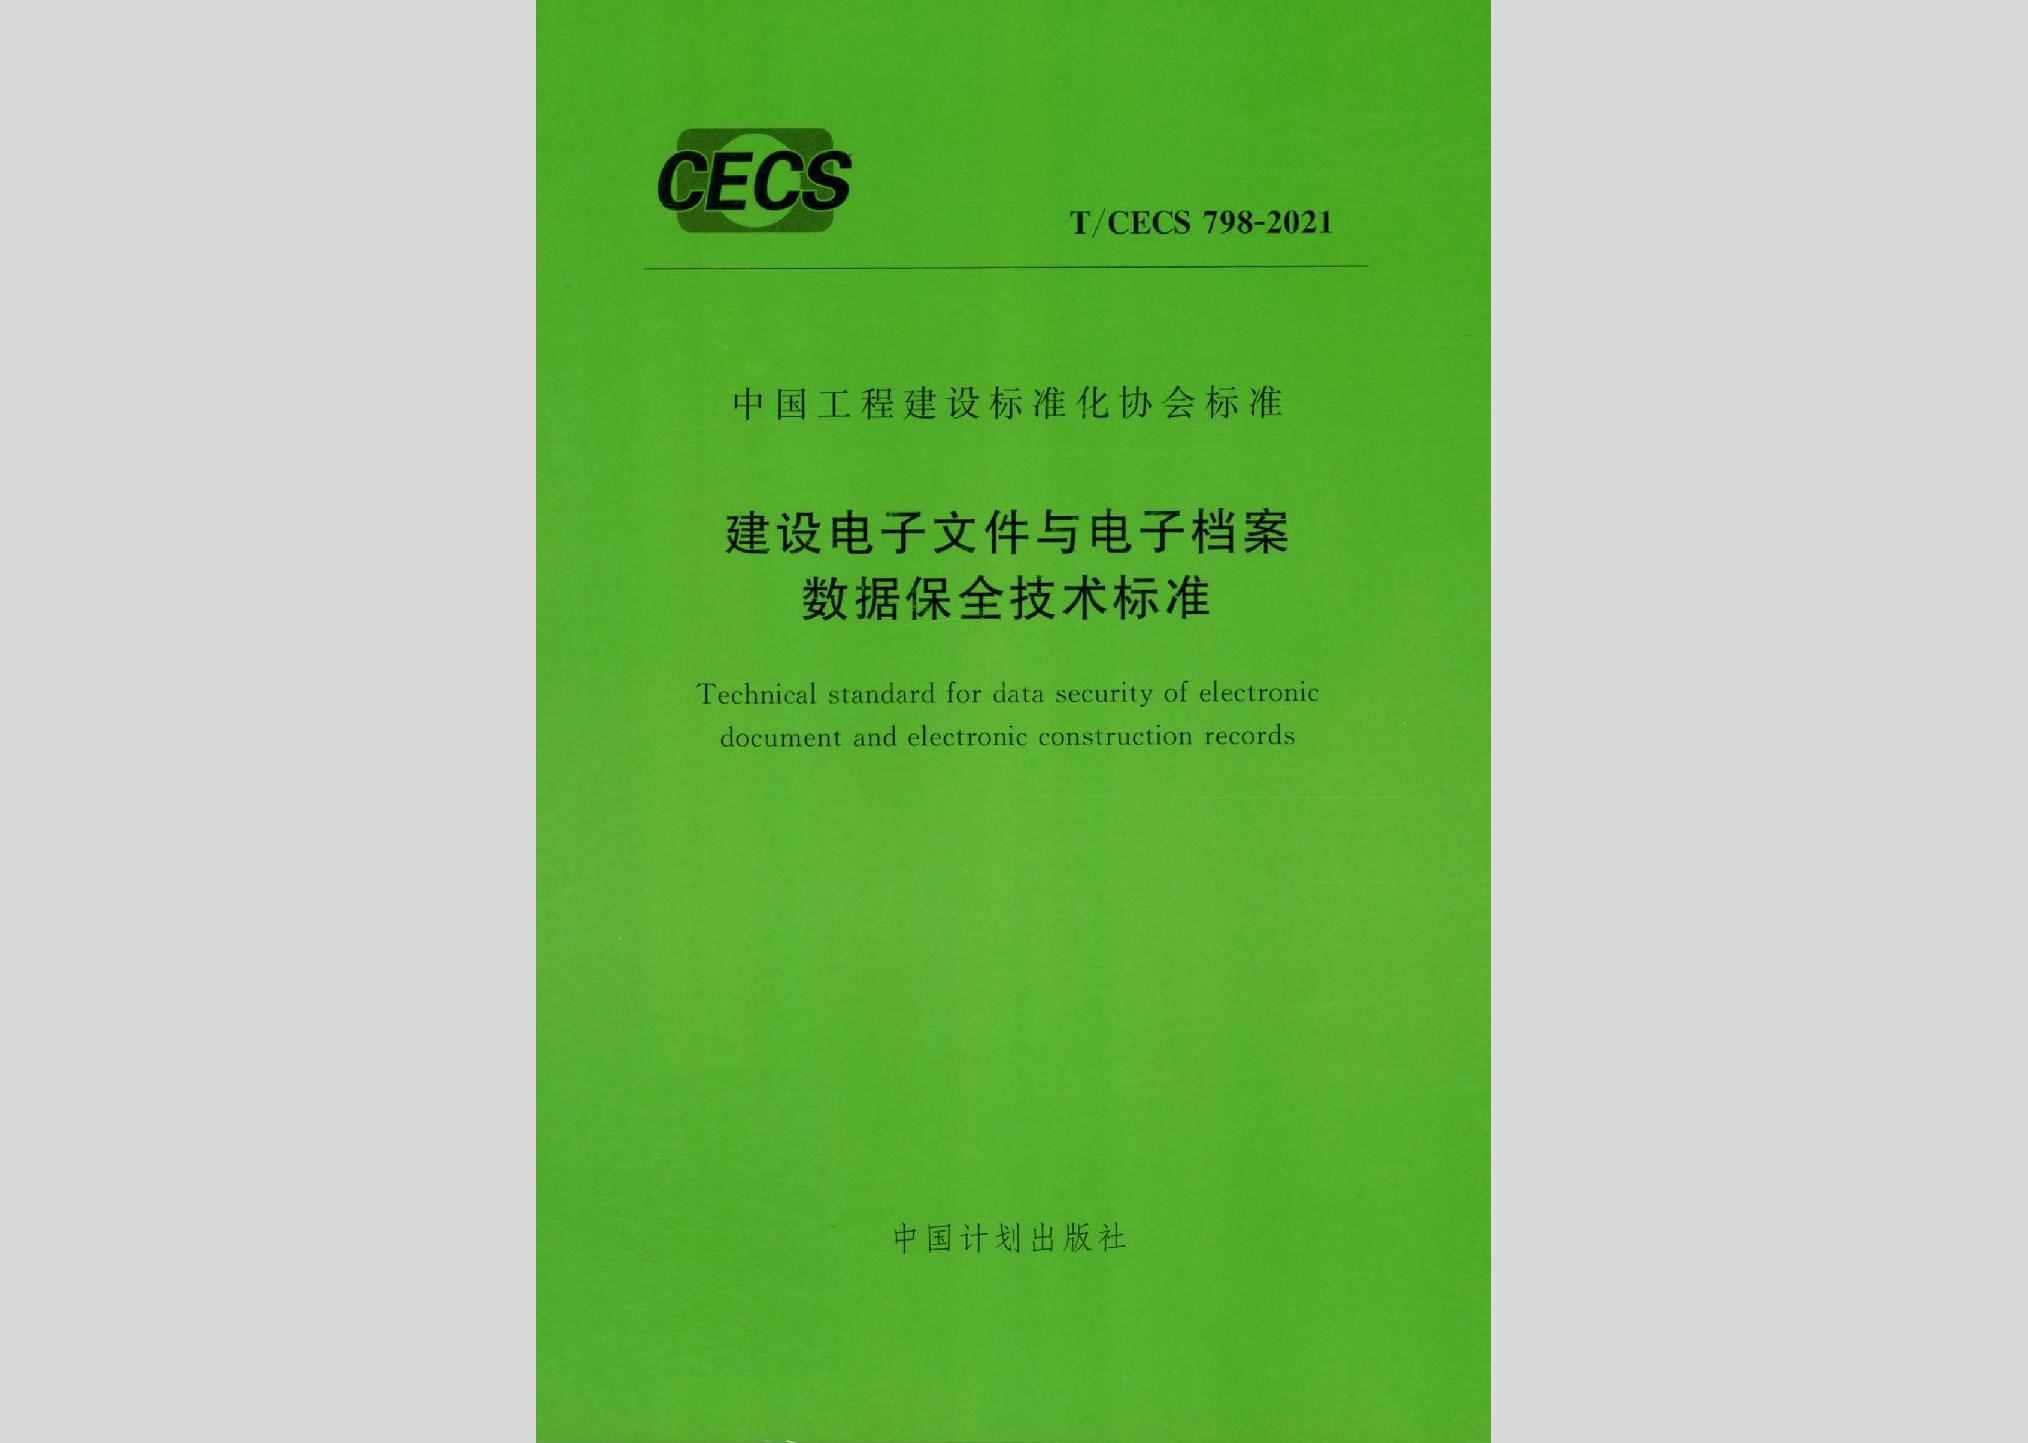 T/CECS798-2021：建设电子文件与电子档案数据保全技术标准